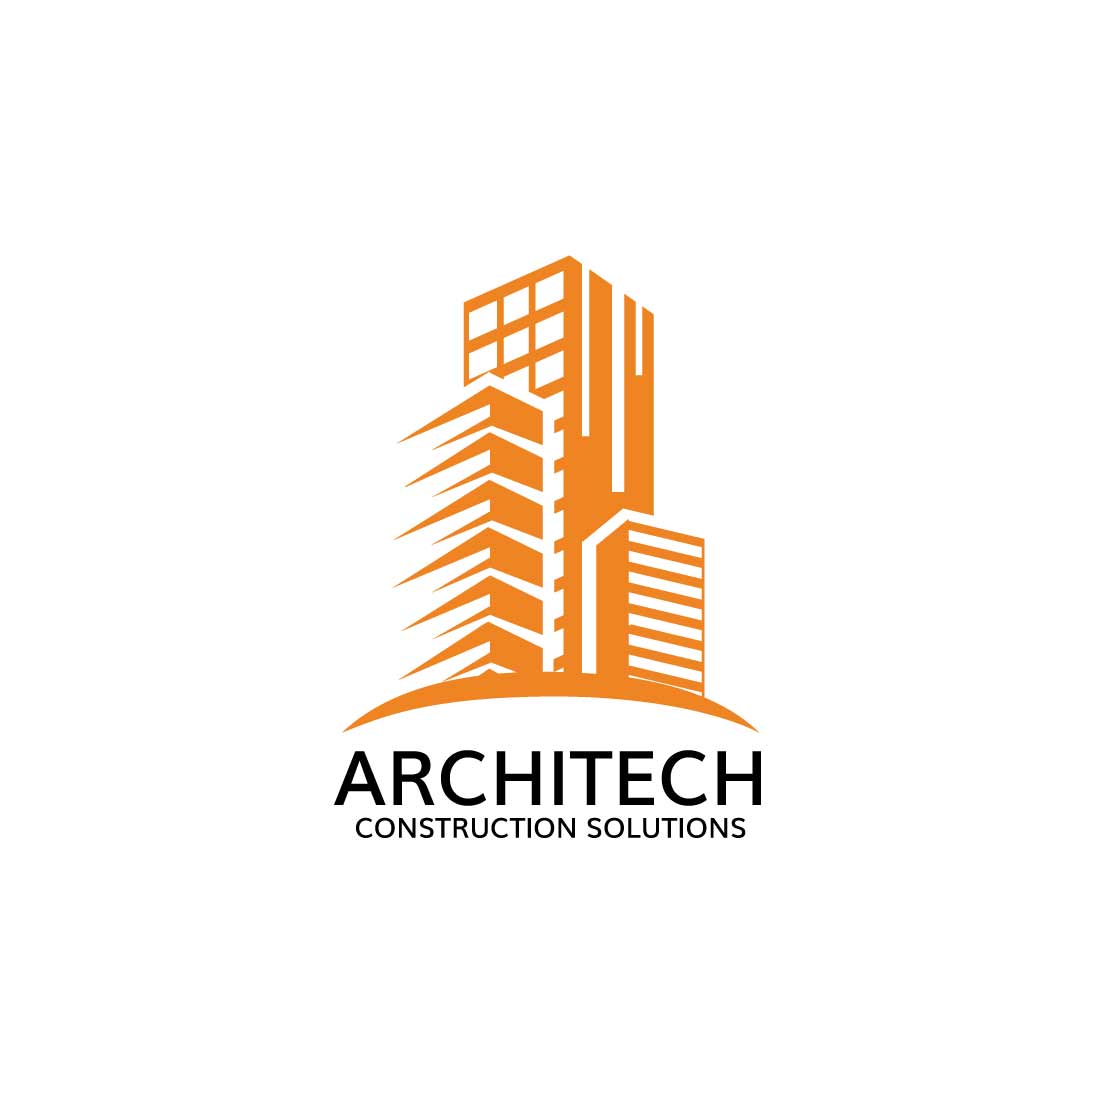 Architect Construction Logo Design preview image.